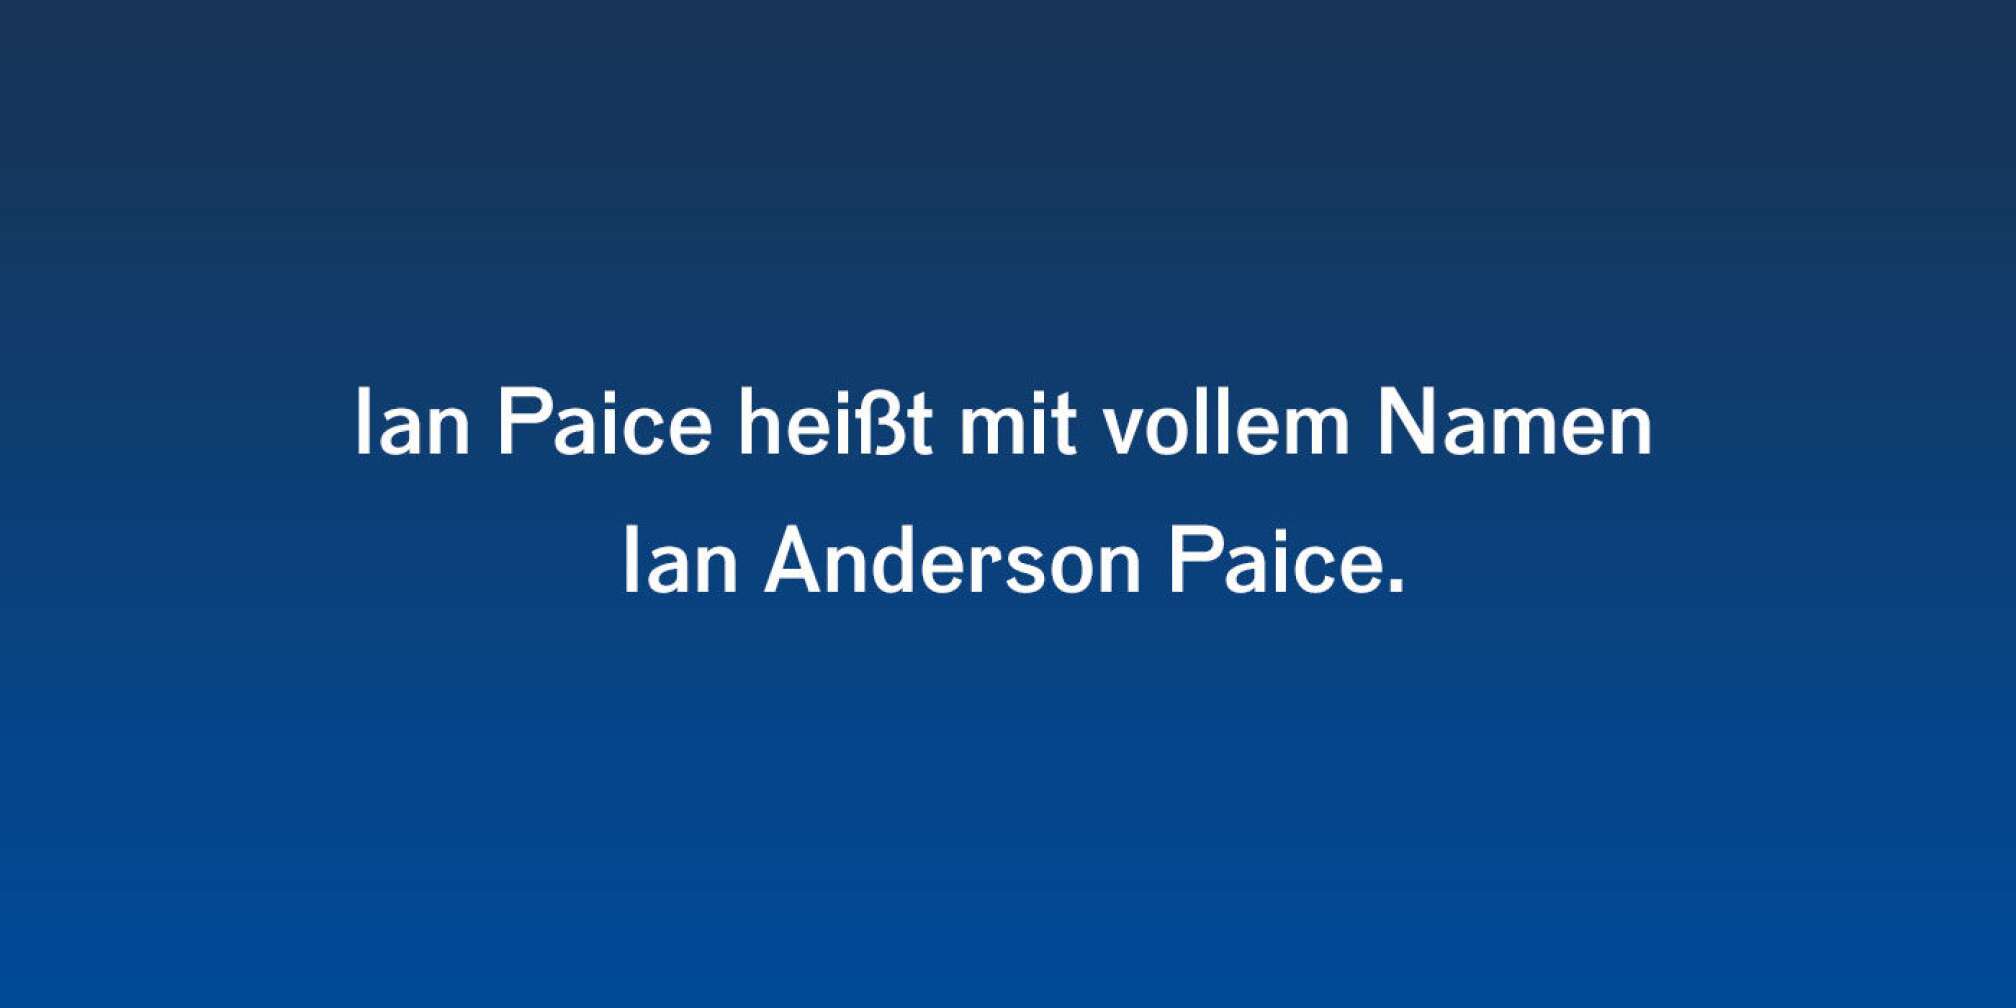 Ian Paice heißt mit vollem Namen Ian Anderson Paice.